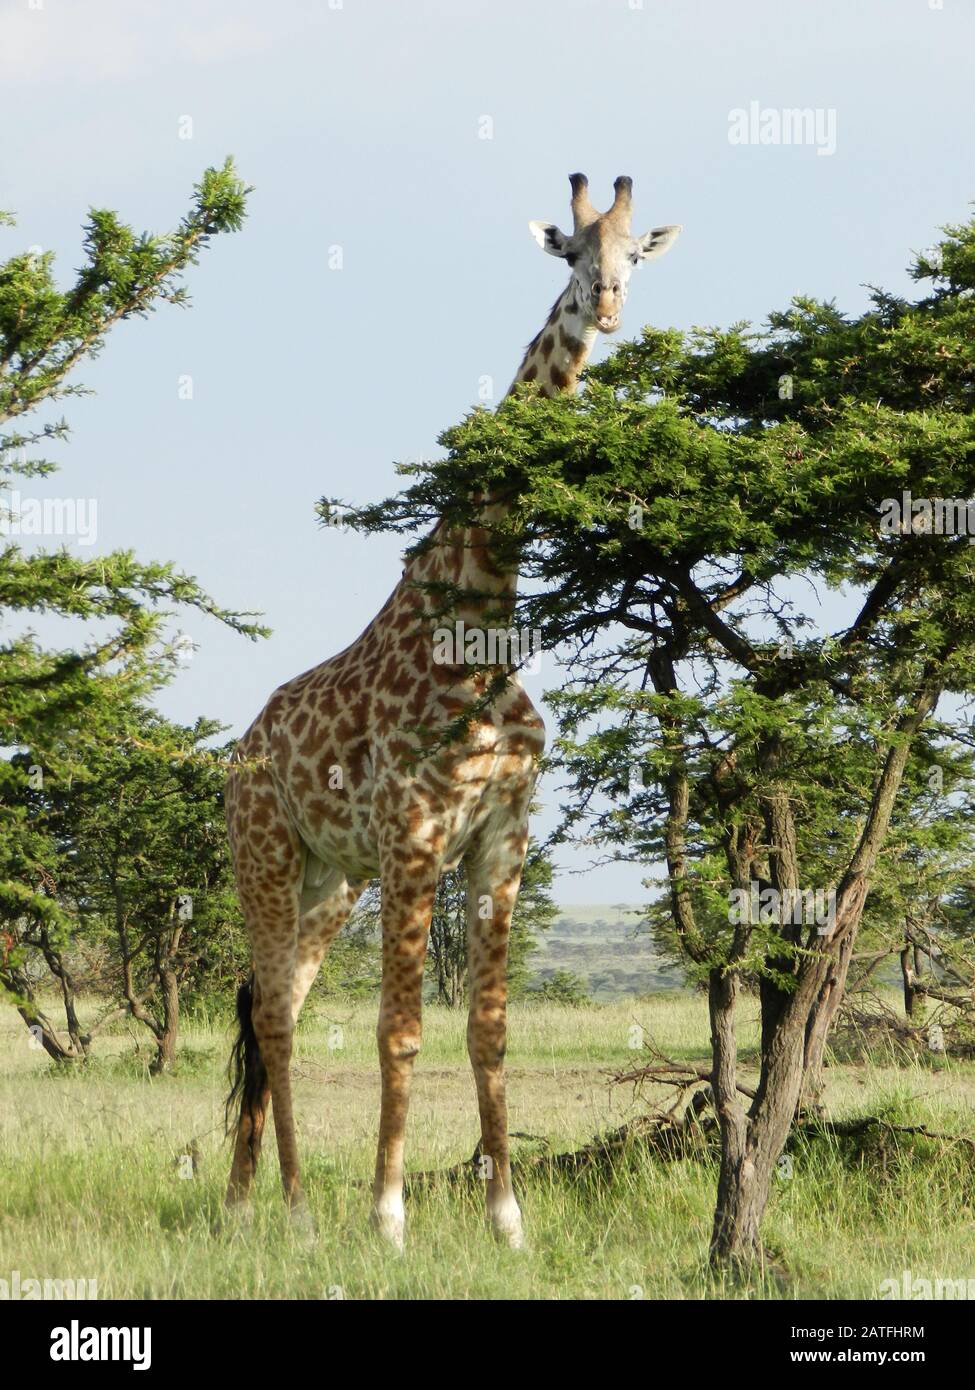 Lonely giraffe eating acacia leaves in the African savannah, Kenya Stock Photo